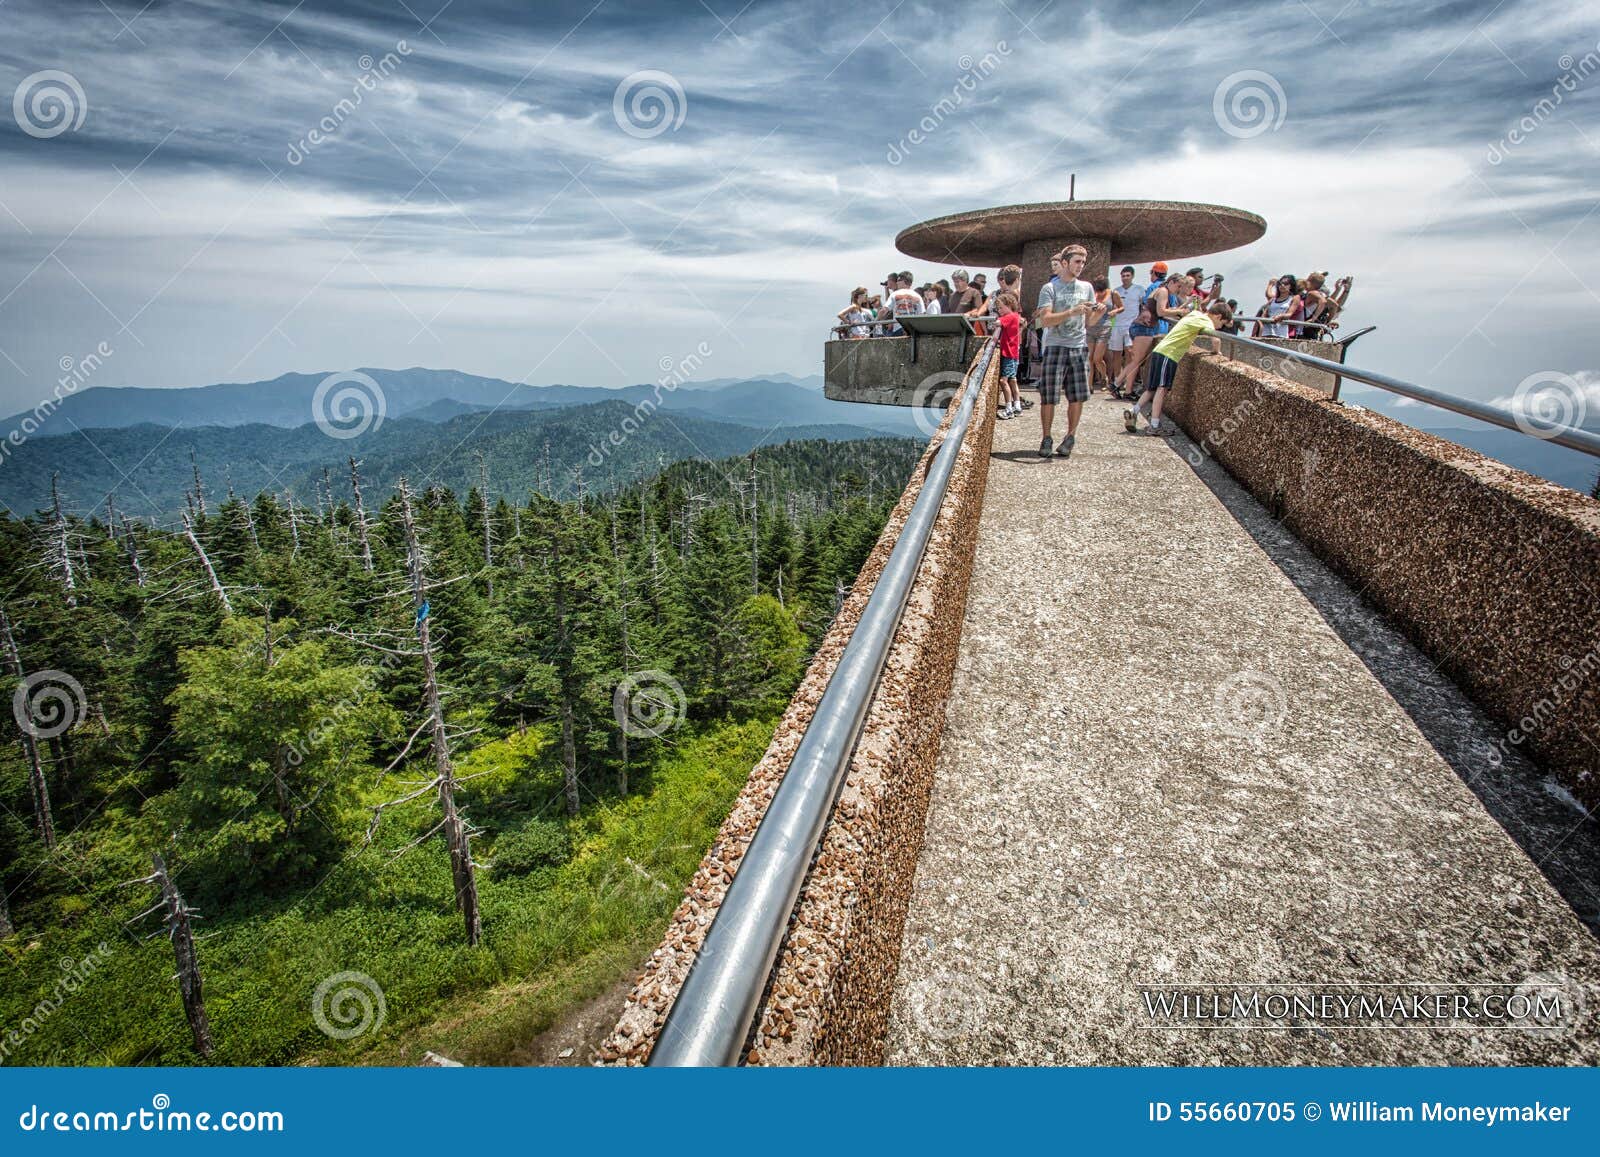 tourists on observation deck